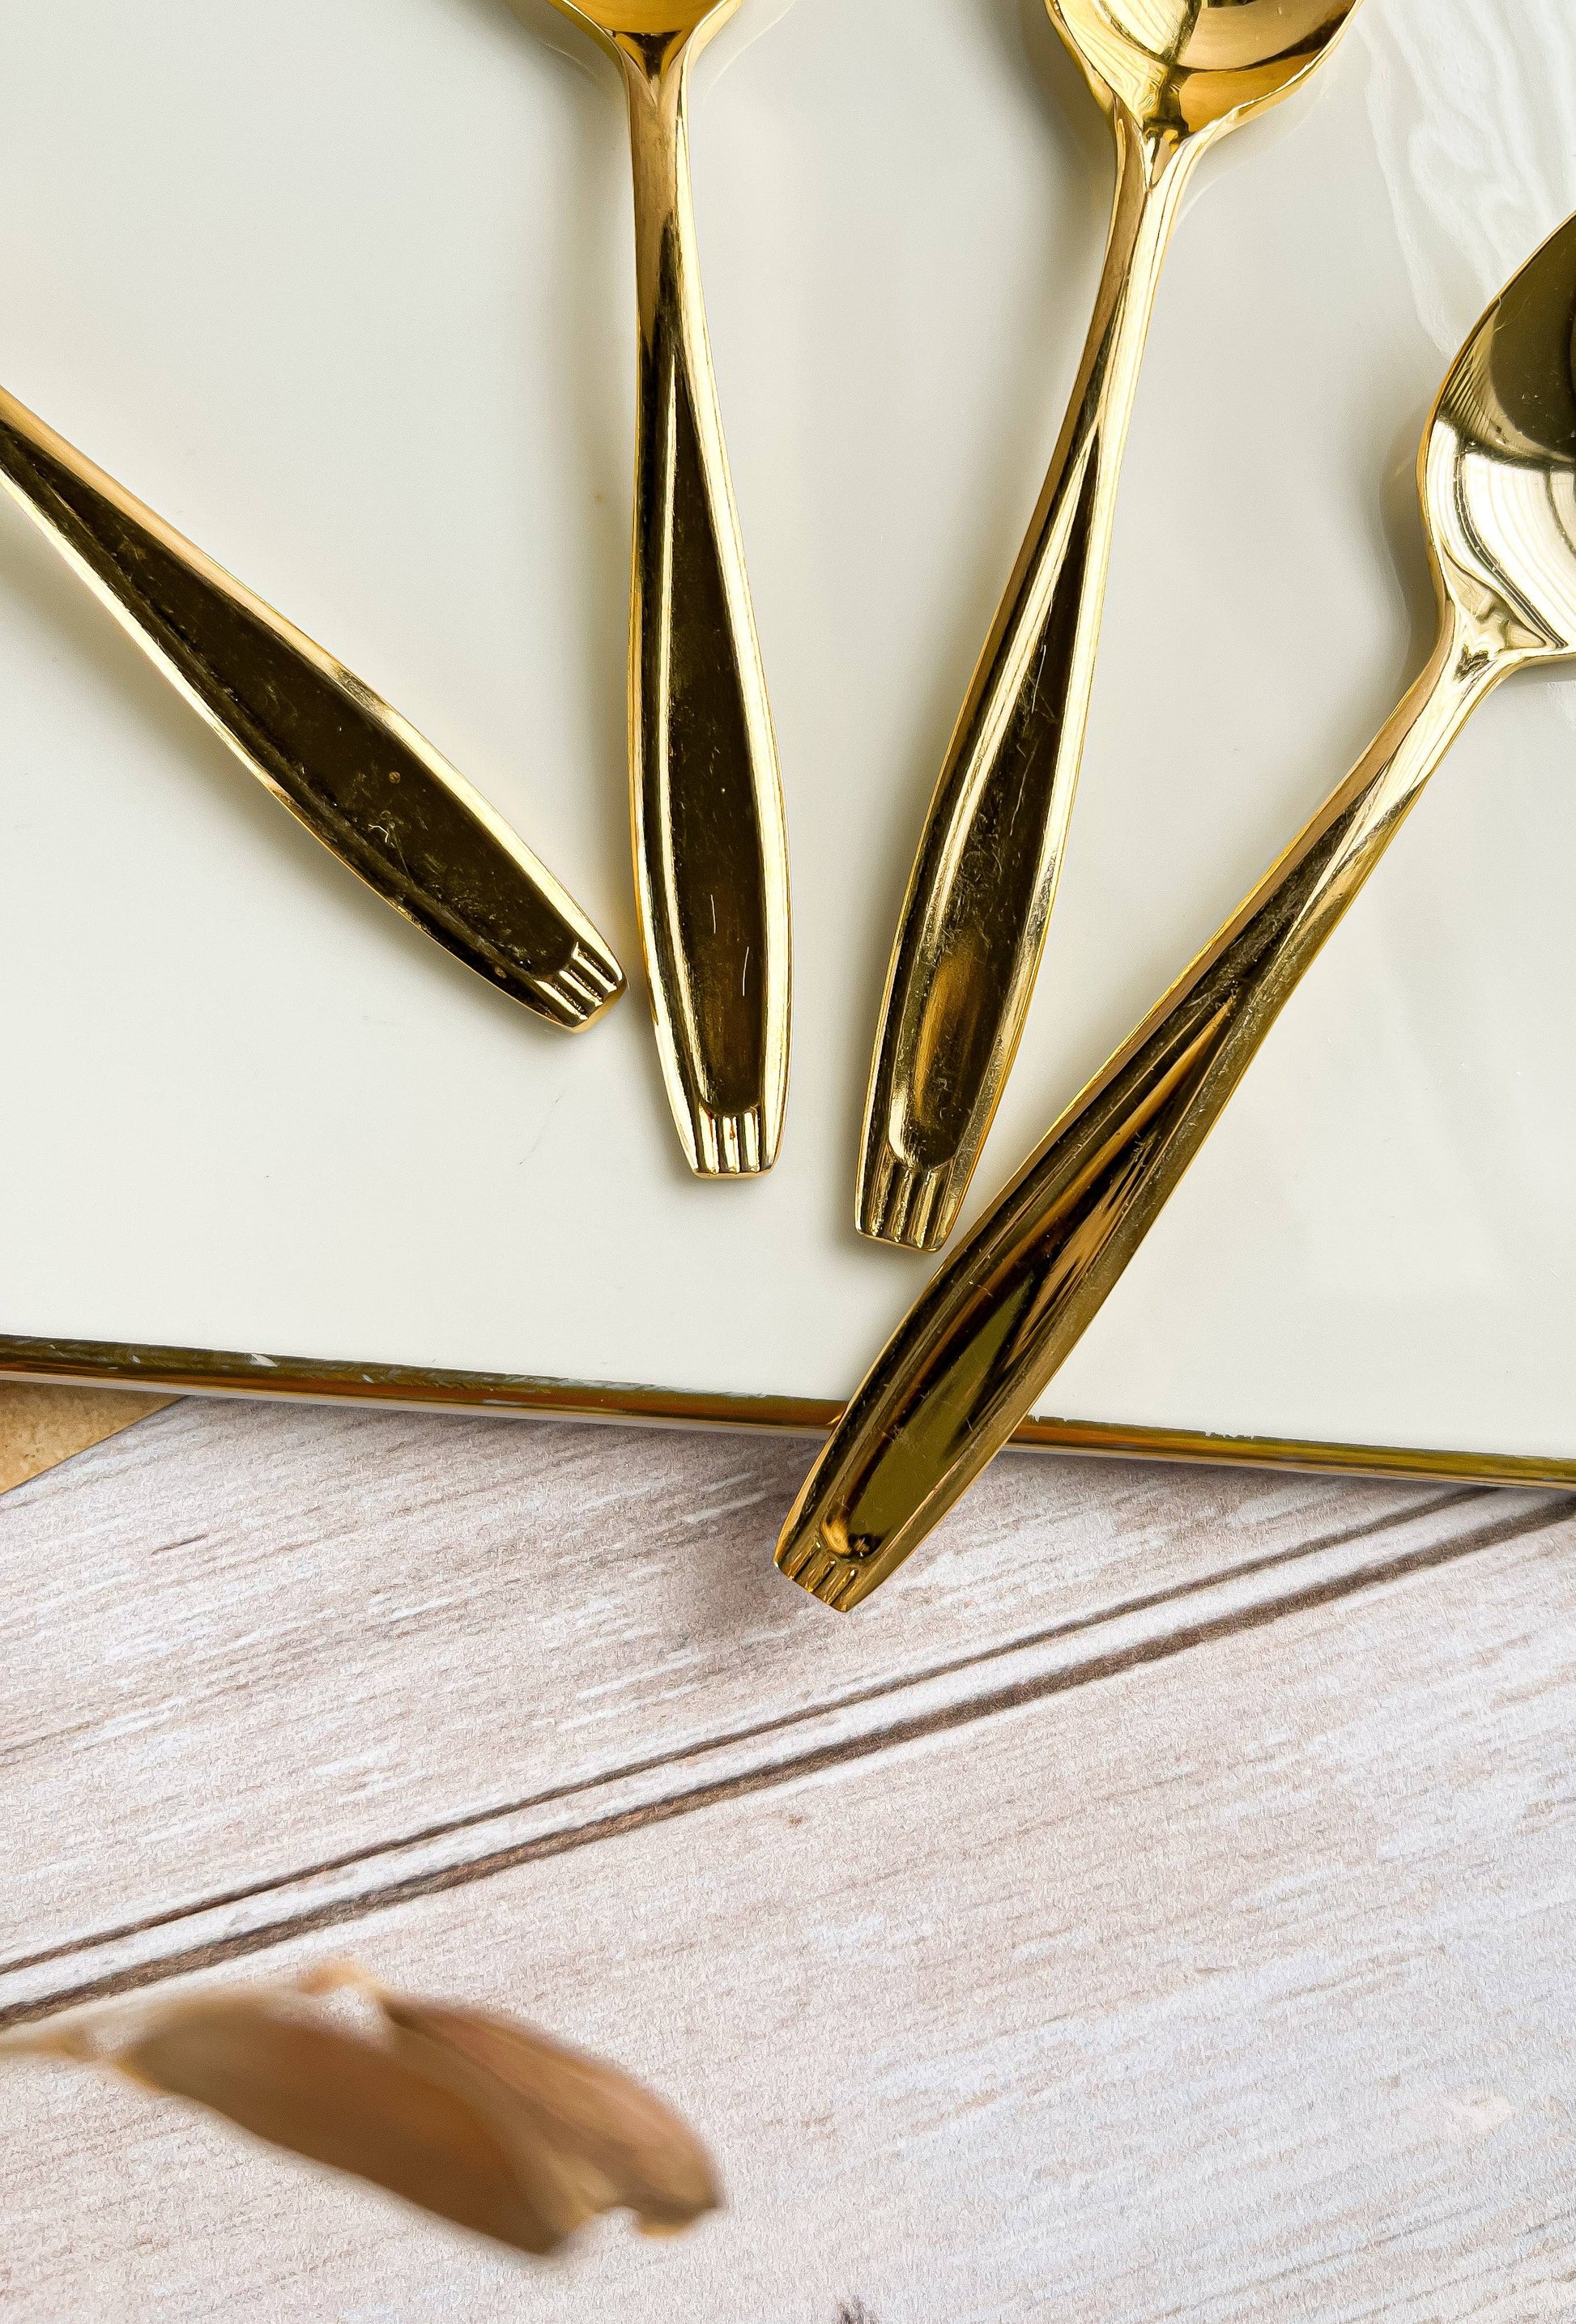 Vintage Gold-Plated Stainless Steel Teaspoon Set of 6 - Sleek Design - SOSC Home